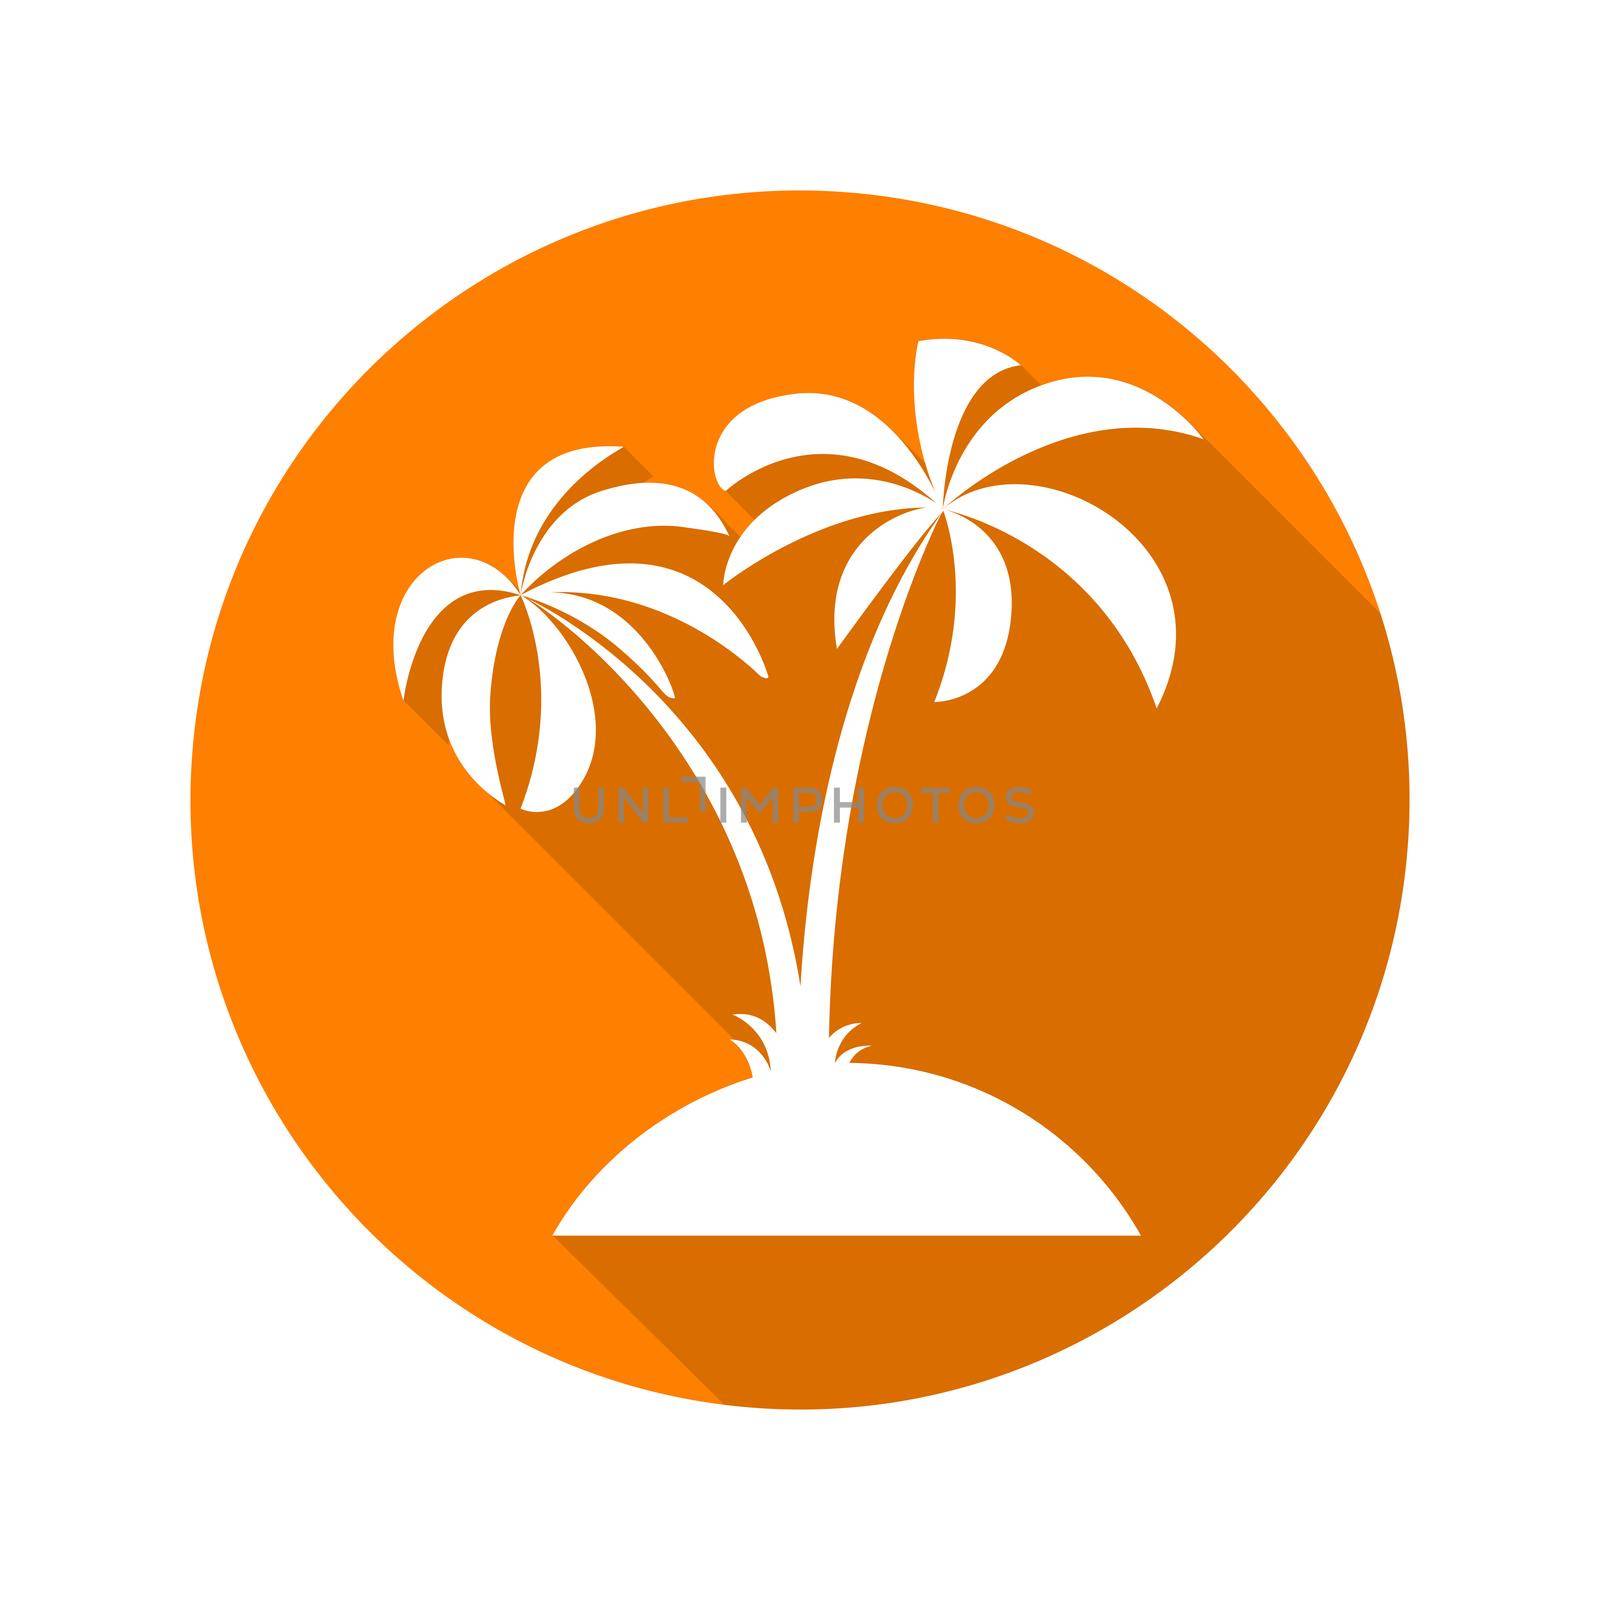 Palm tree. Flat icon with long shadow on orange round background. Flat design style. illustration. by Marin4ik